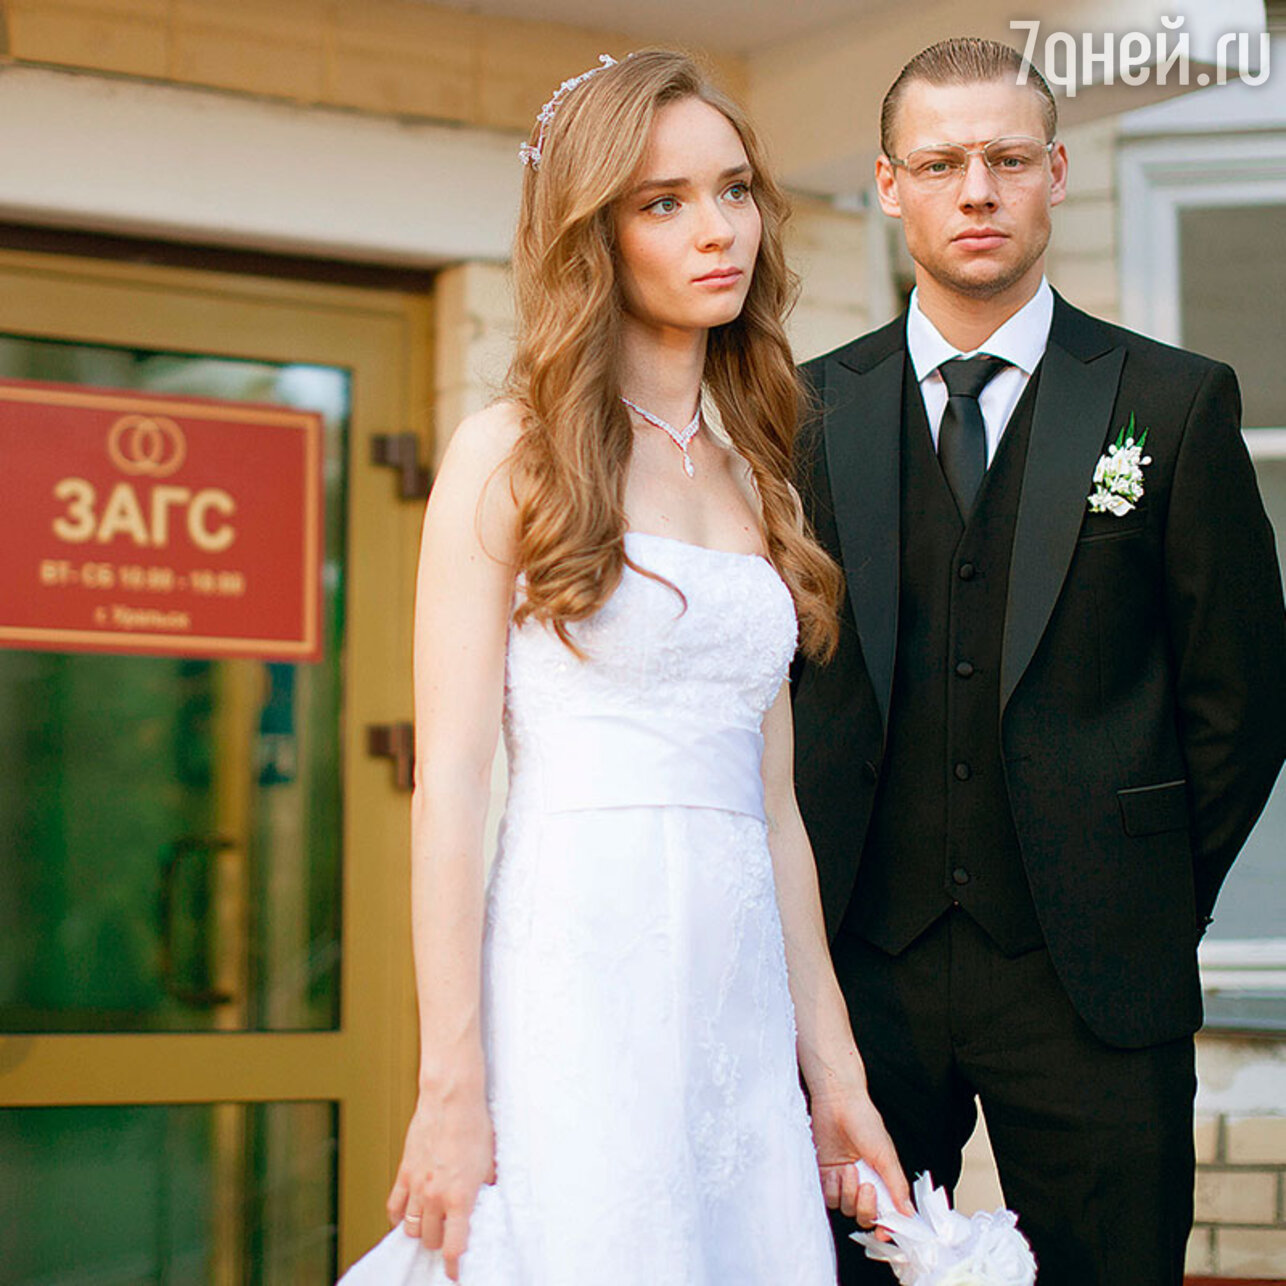 Дмитрий Власкин и Анна Бегунова свадьба